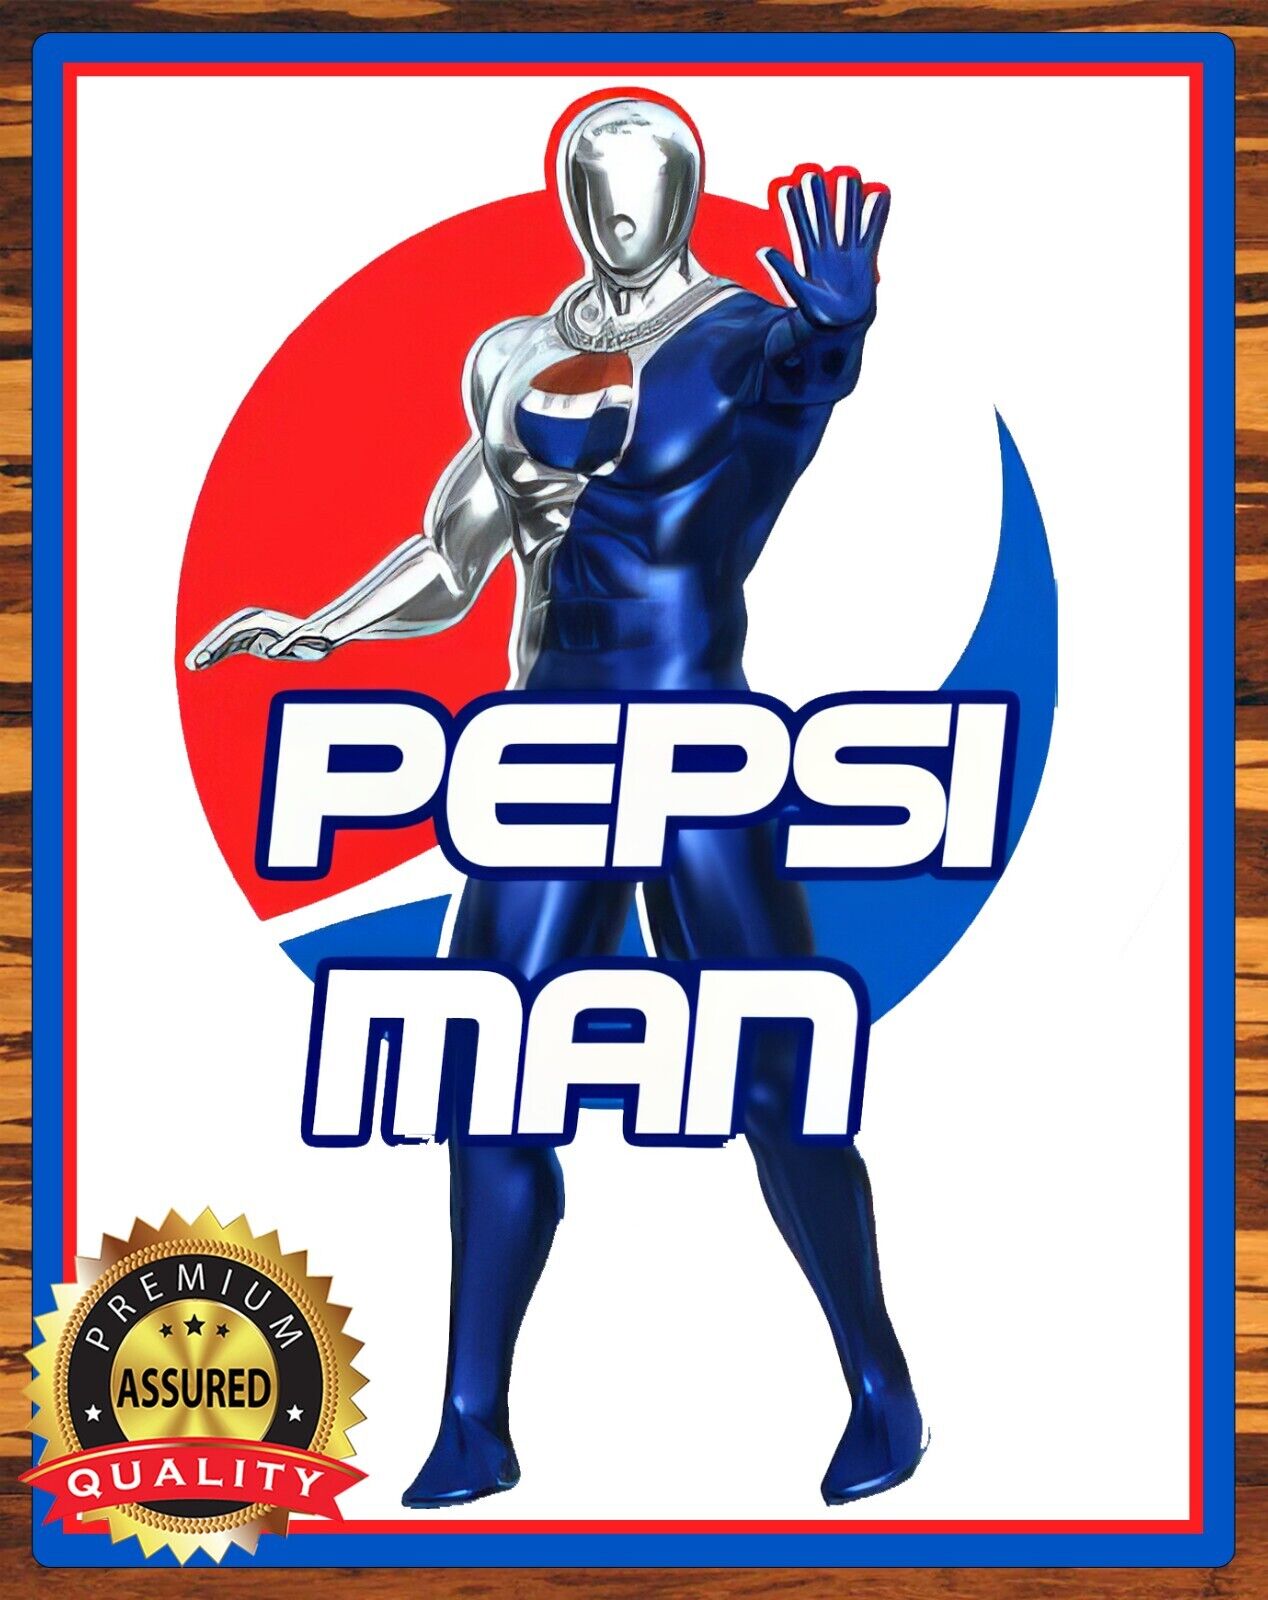 Pepsi Cola - Pepsi Man - 1999 - Metal Sign 11 x 14